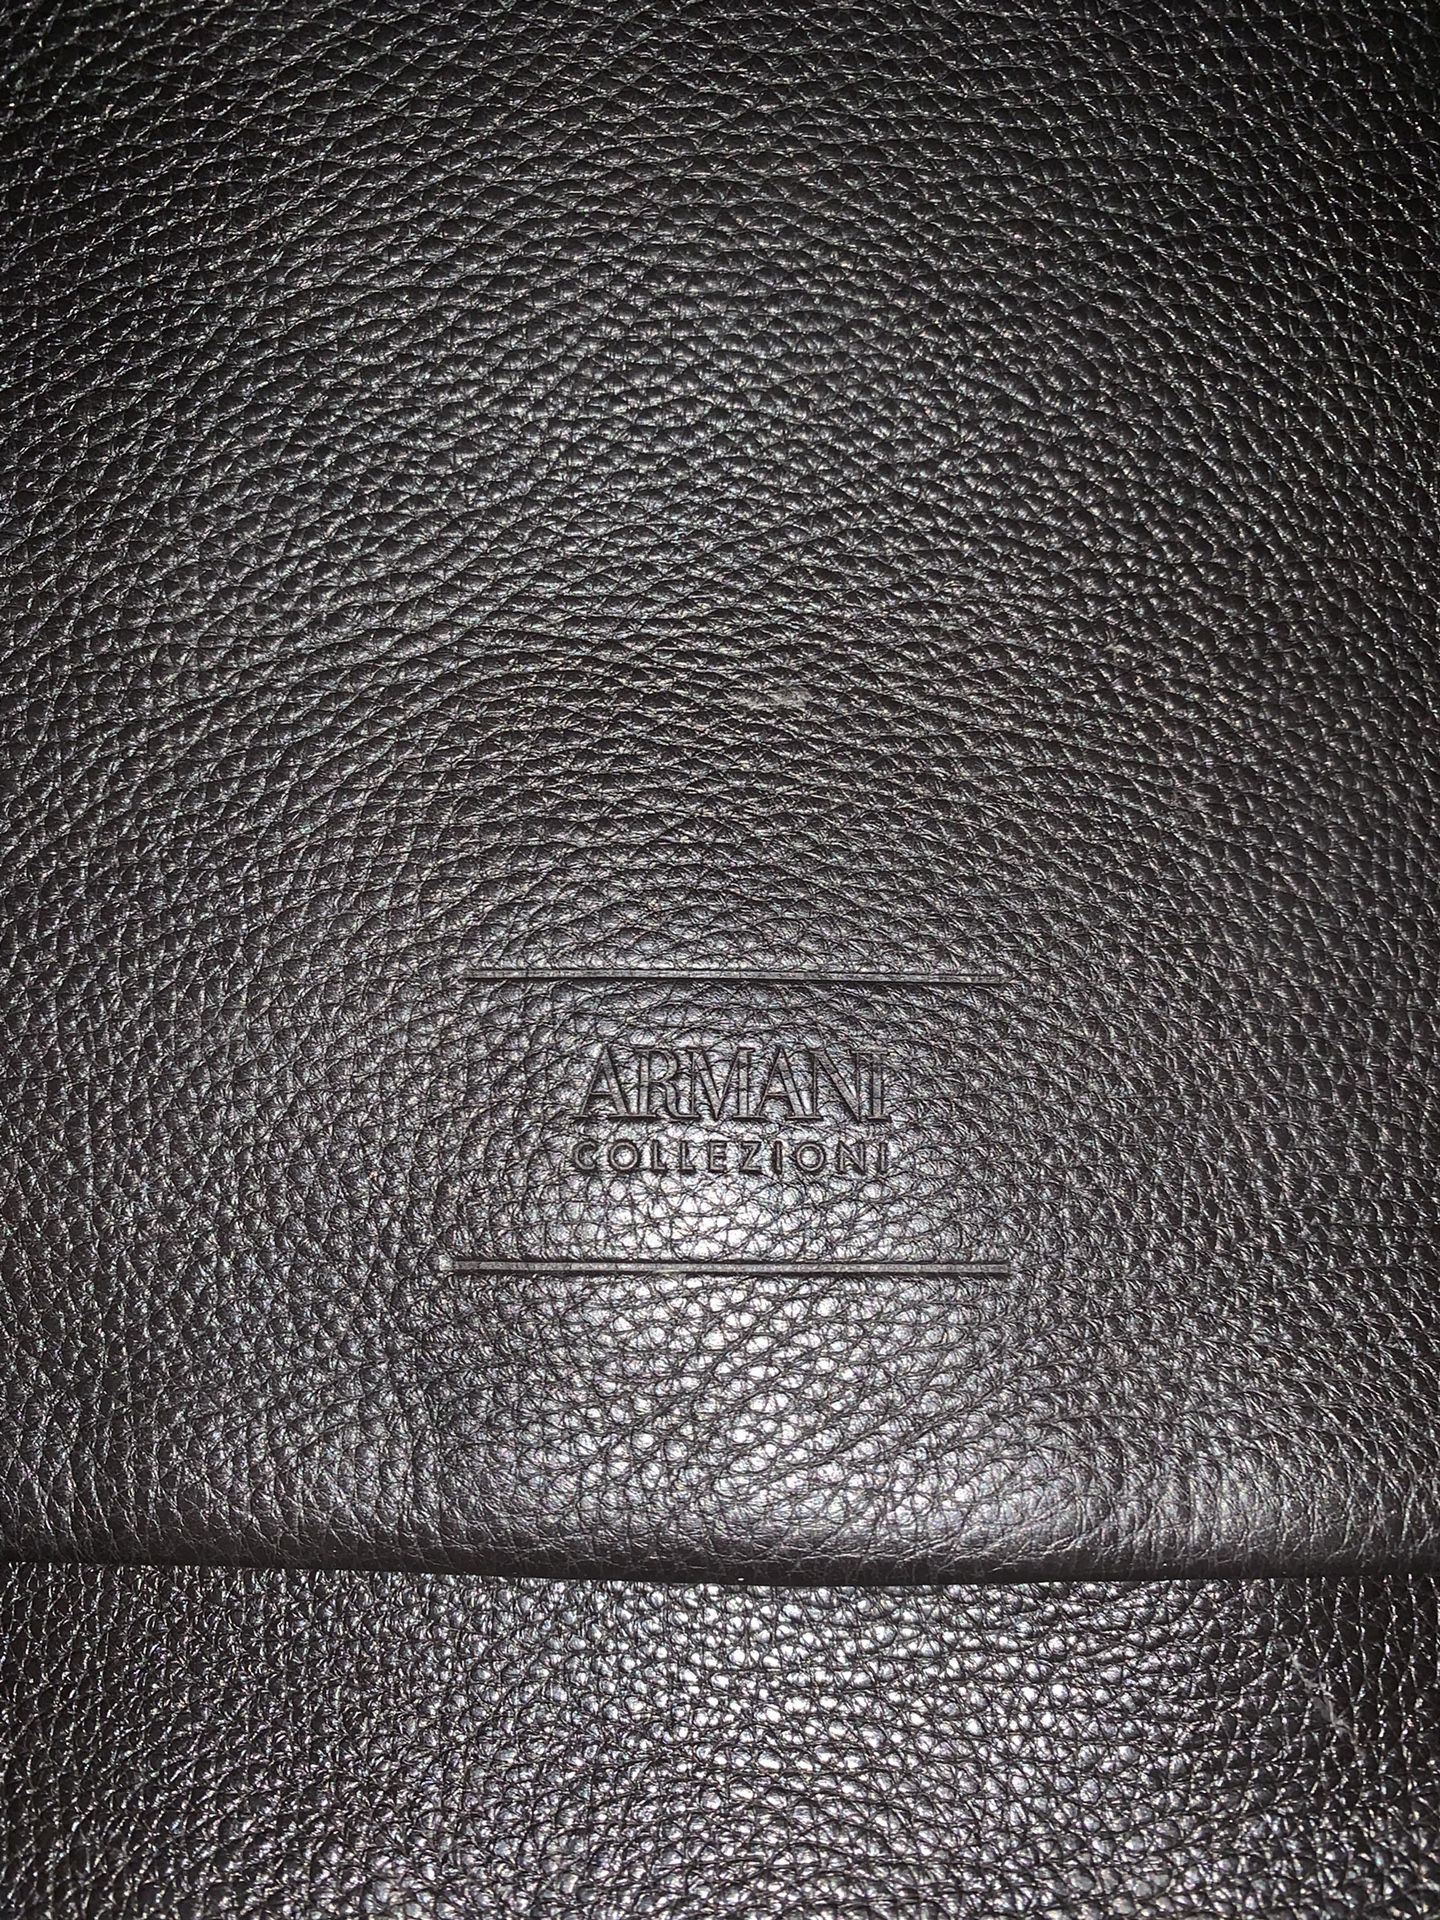 Armani leather bag